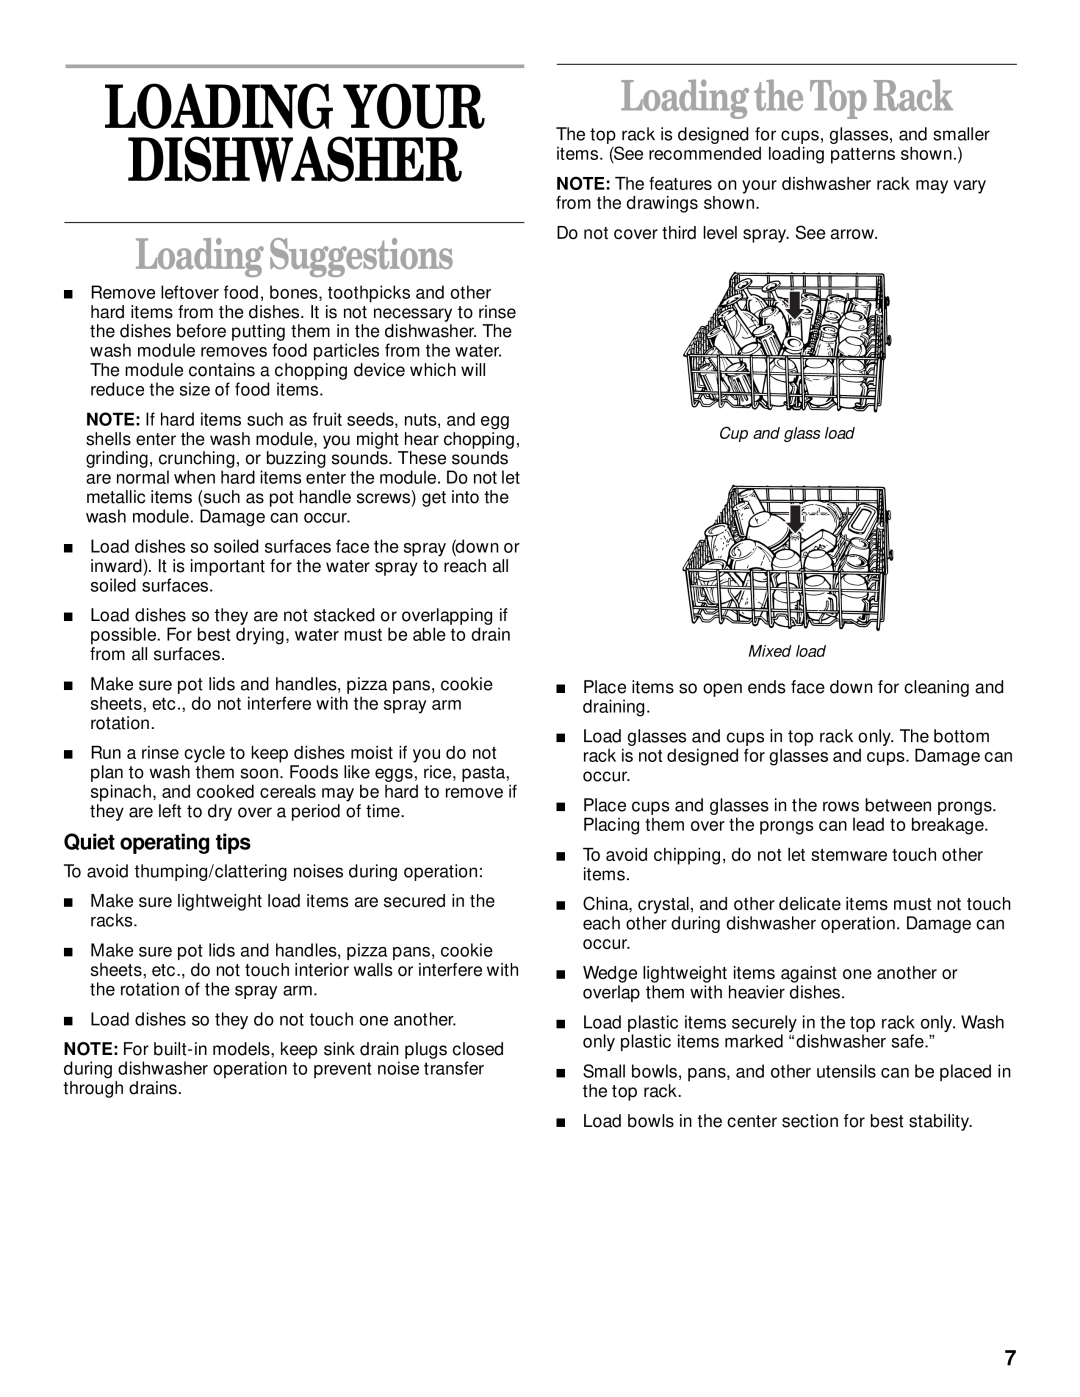 Whirlpool DU912 8051563 manual Dishwasher, LoadingSuggestions, LoadingtheTop Rack, Quiet operating tips, Loading Your 